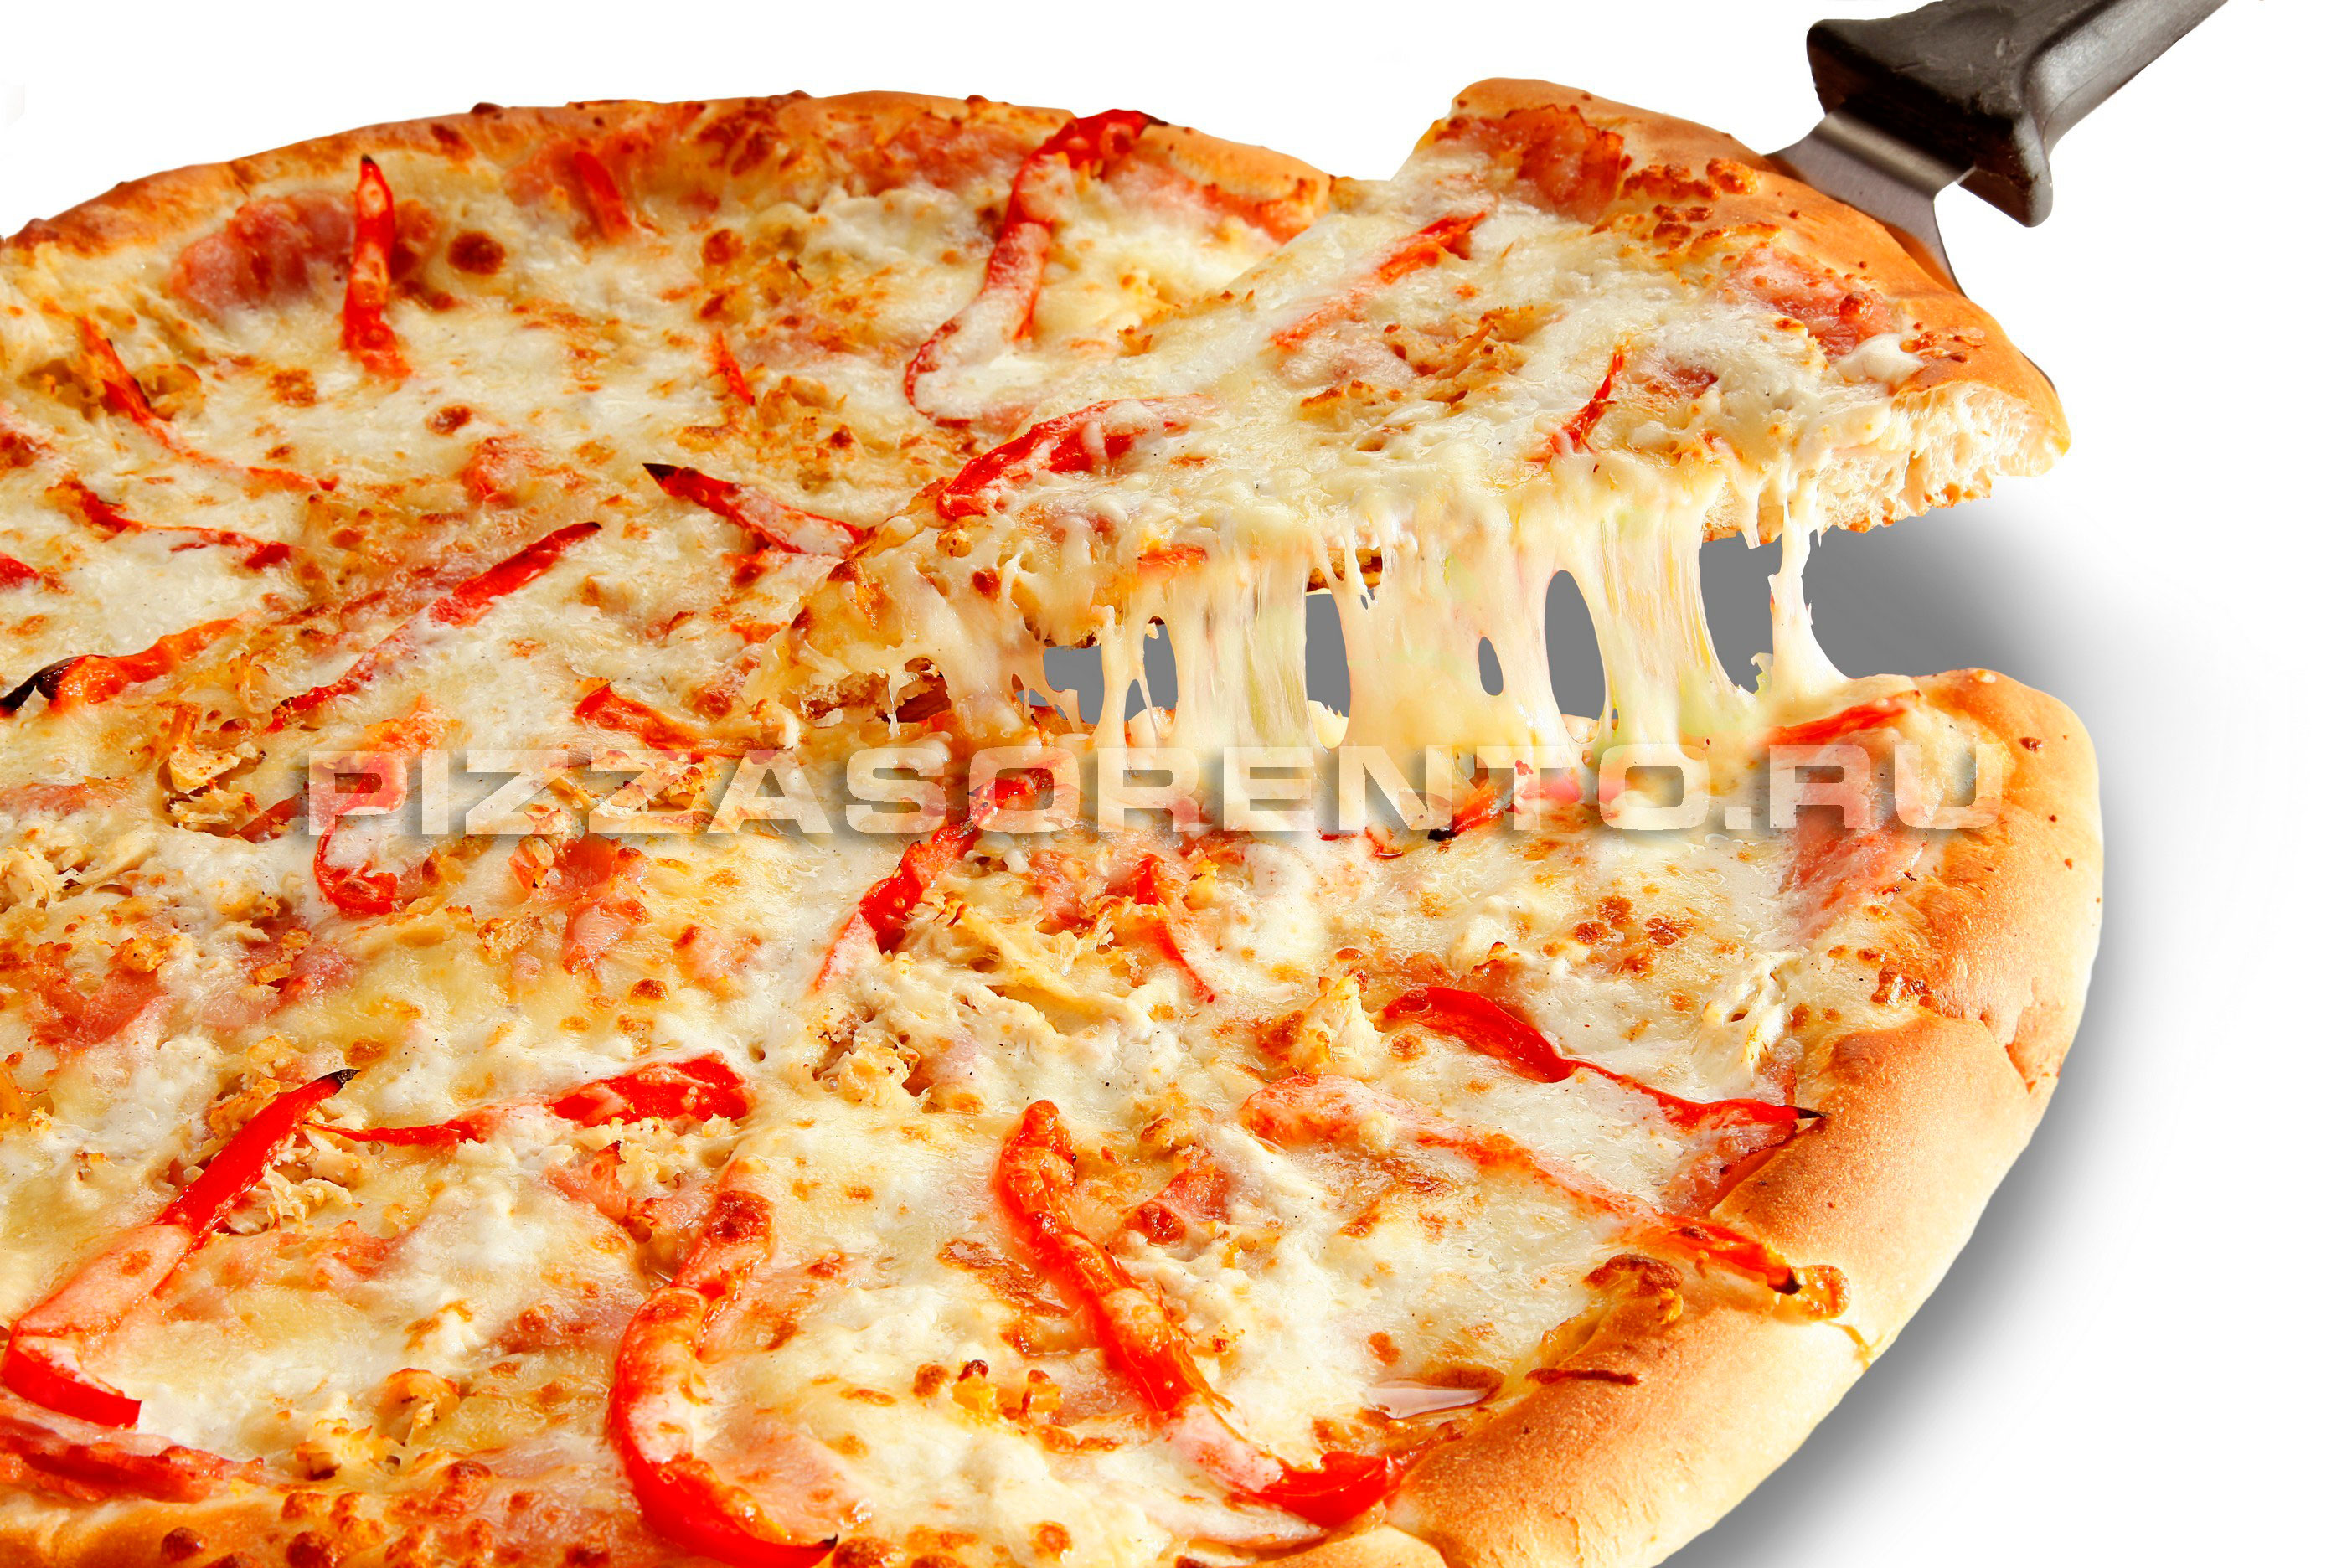 сливочная начинка на пиццу фото 95